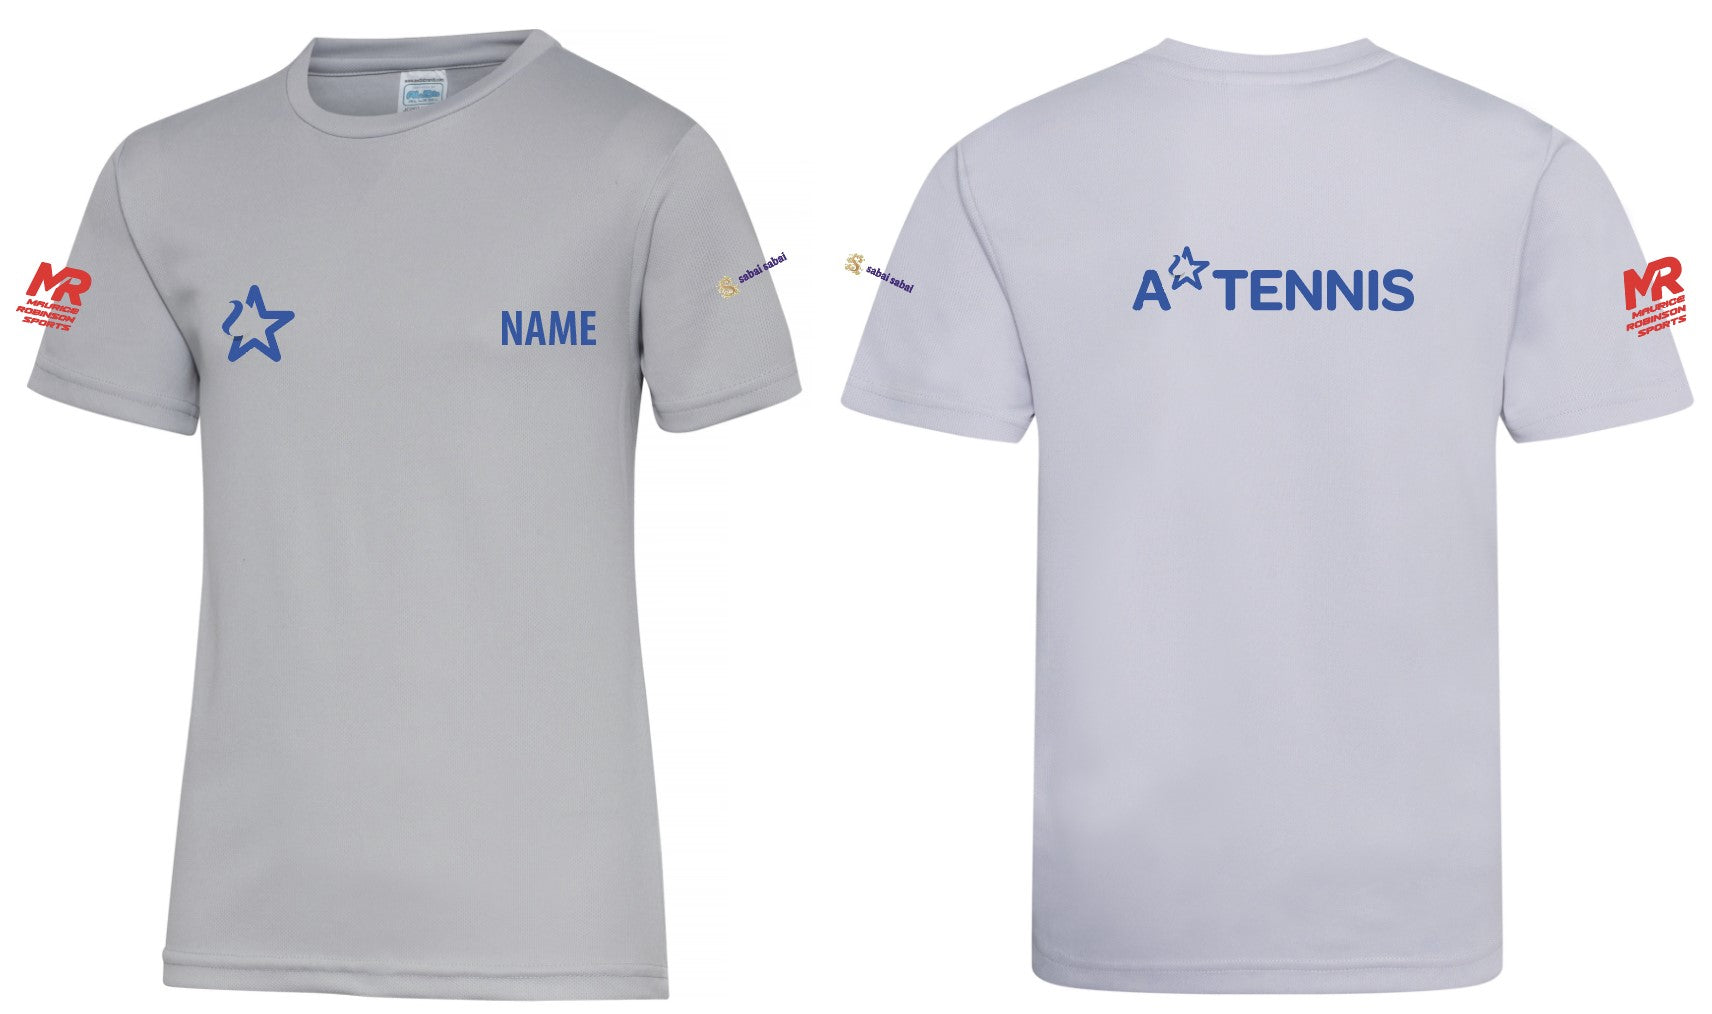 A Star Tennis Adult Training T-shirt